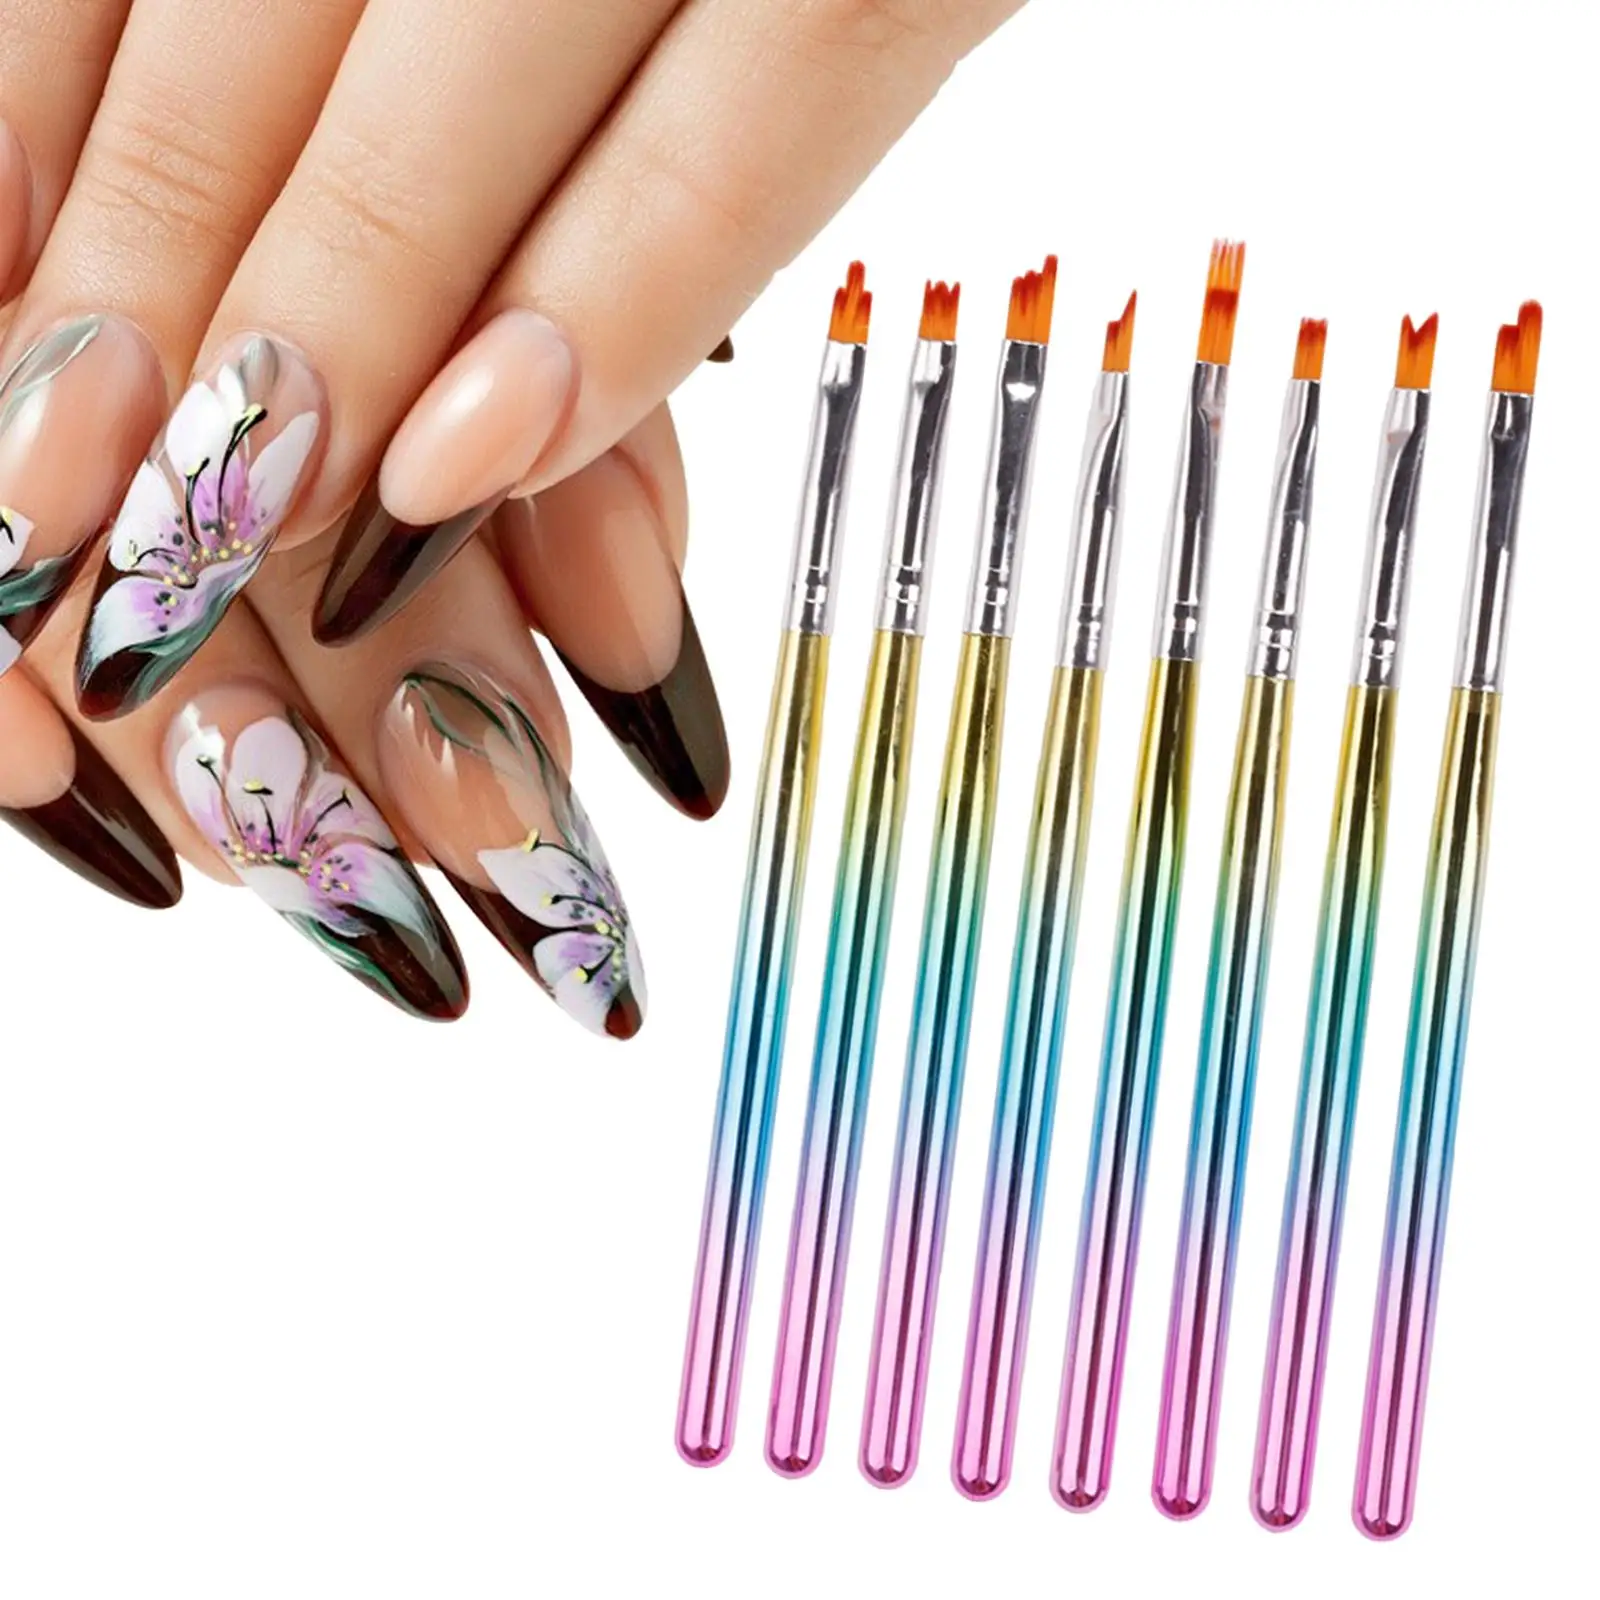 8Pcs Nail Art Brush Pen Manicure Striped Pattern Acrylic Nails 3D UV Gel Painting Pen for Professional Salons Beginner Girls